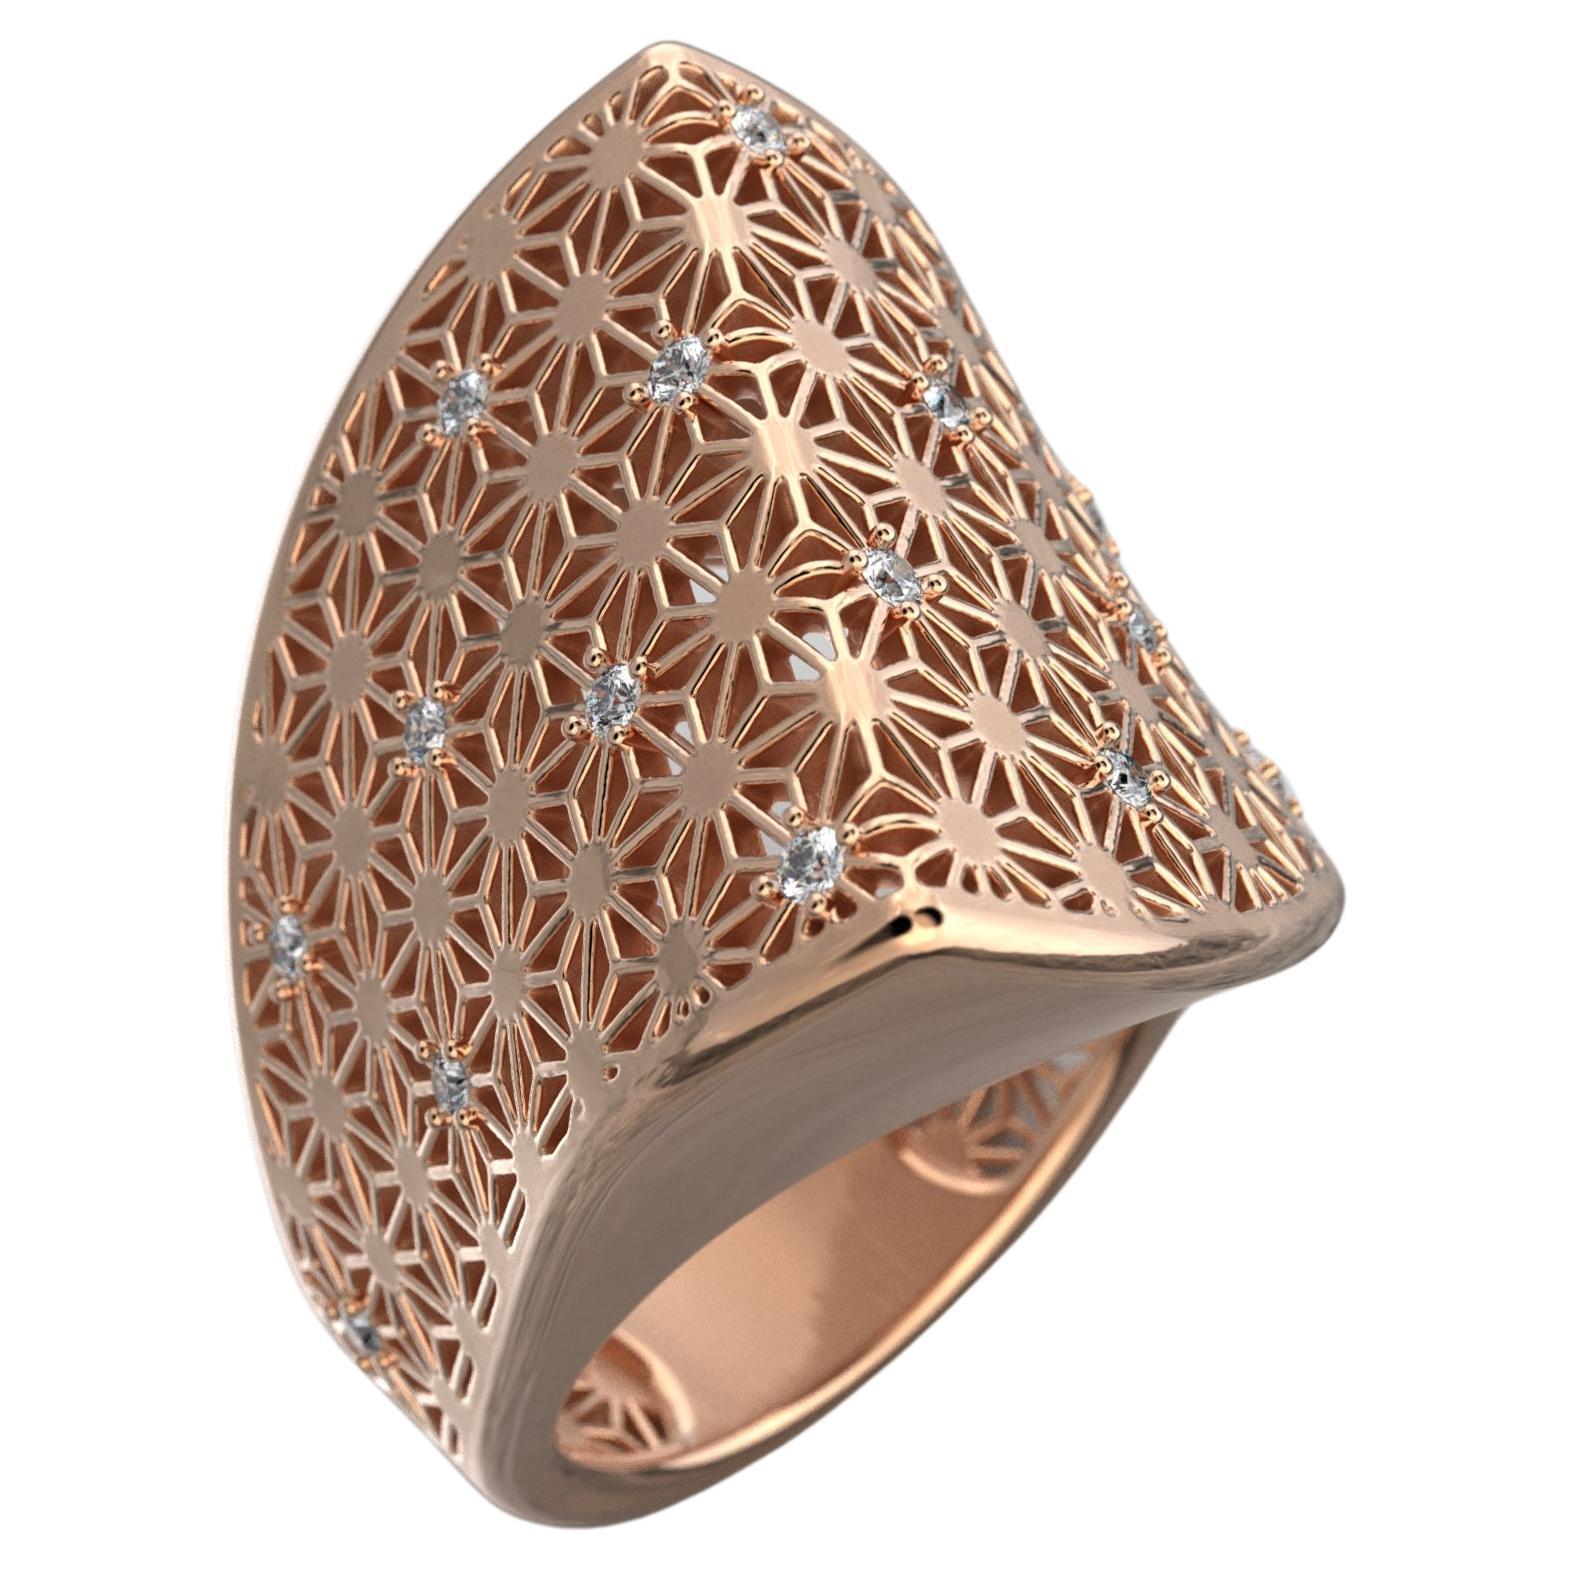 14k Gold Diamond Ring Made in Italy by Oltremare Gioielli Italian Fine Jewelry